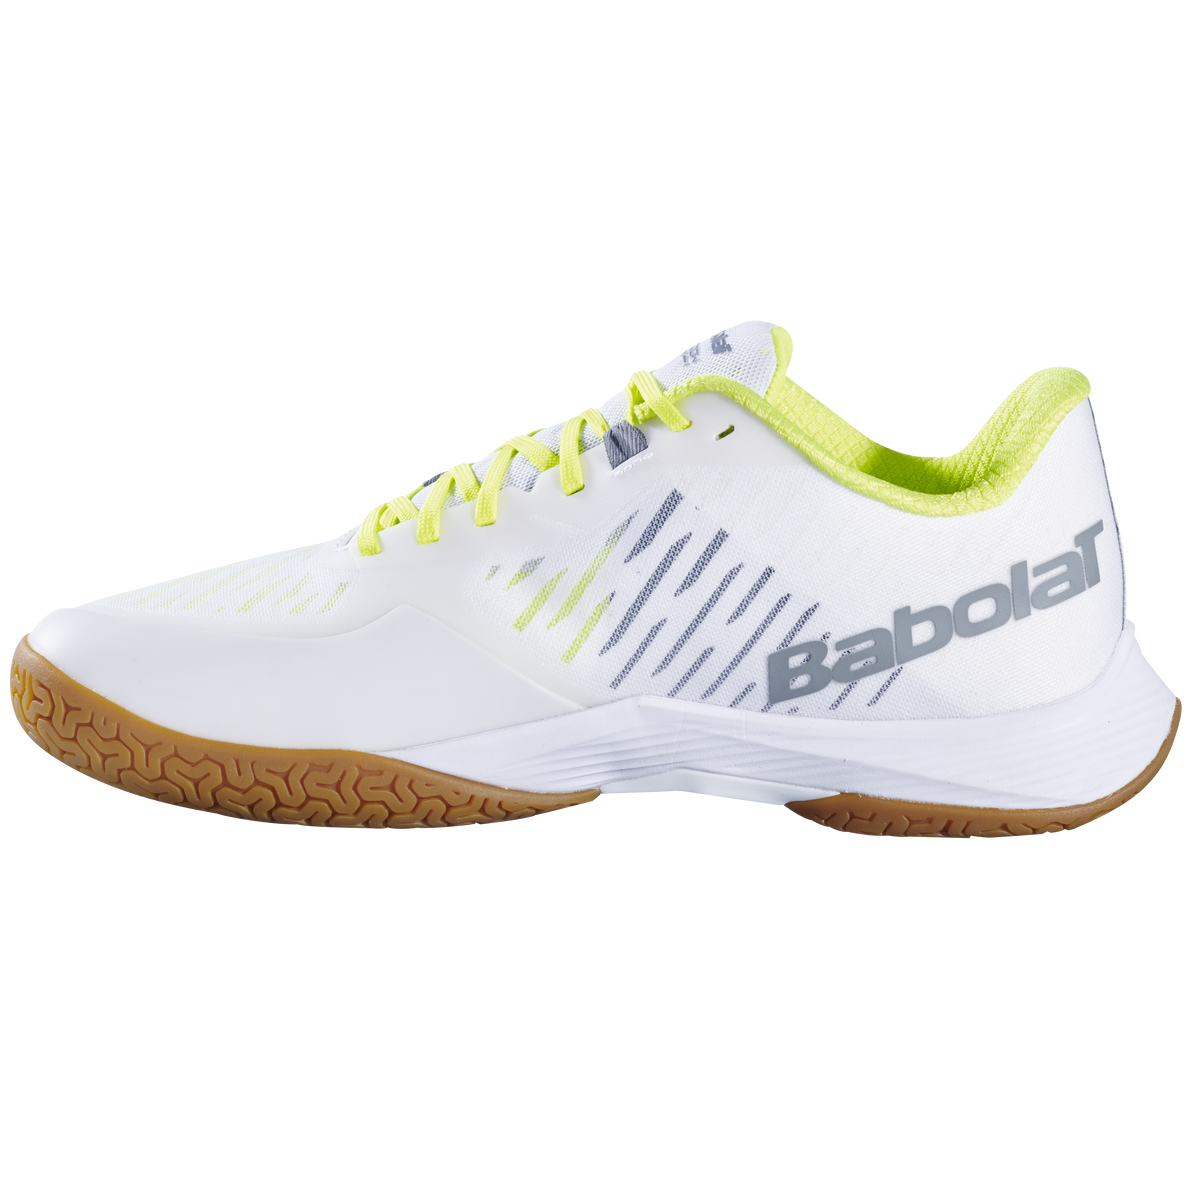 Babolat Shadow Tour 5 30S24356 Badminton Shoes Mens (White/Lime)